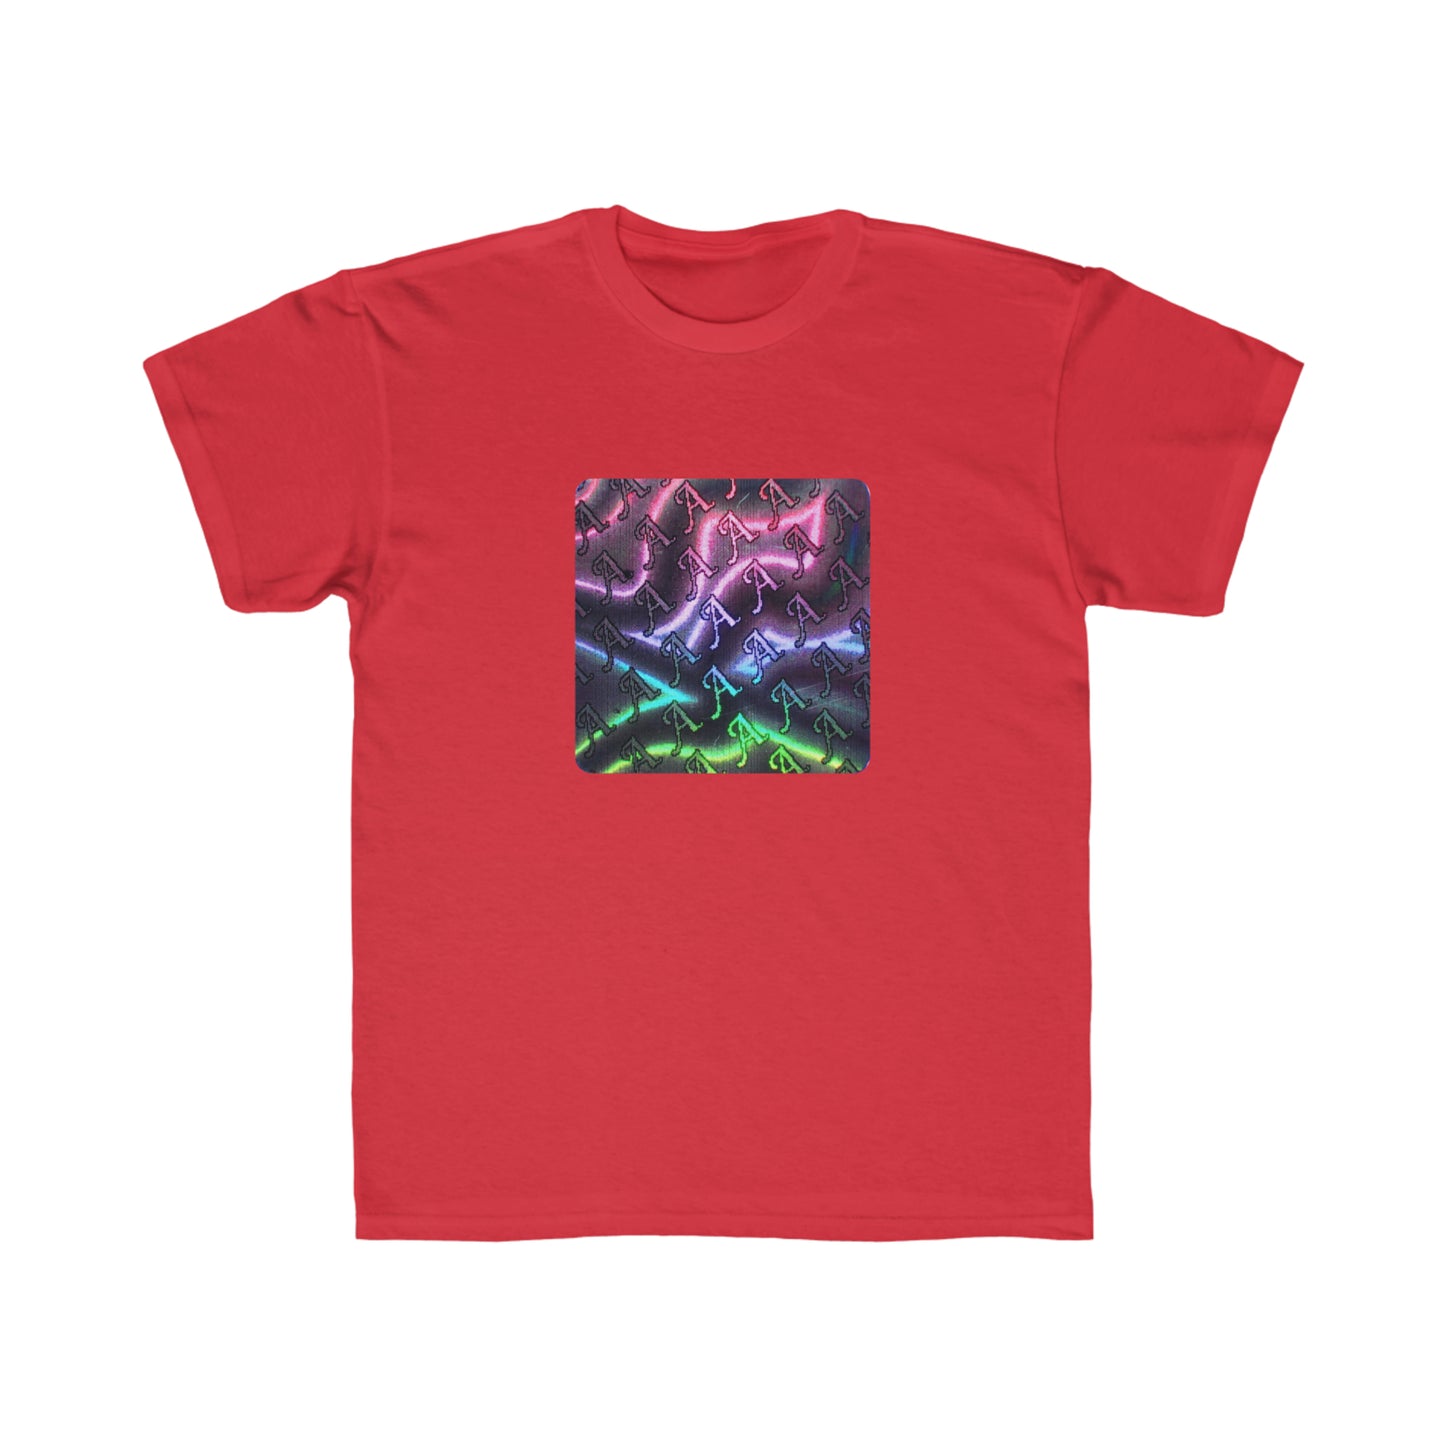 Label A Kids T-Shirt